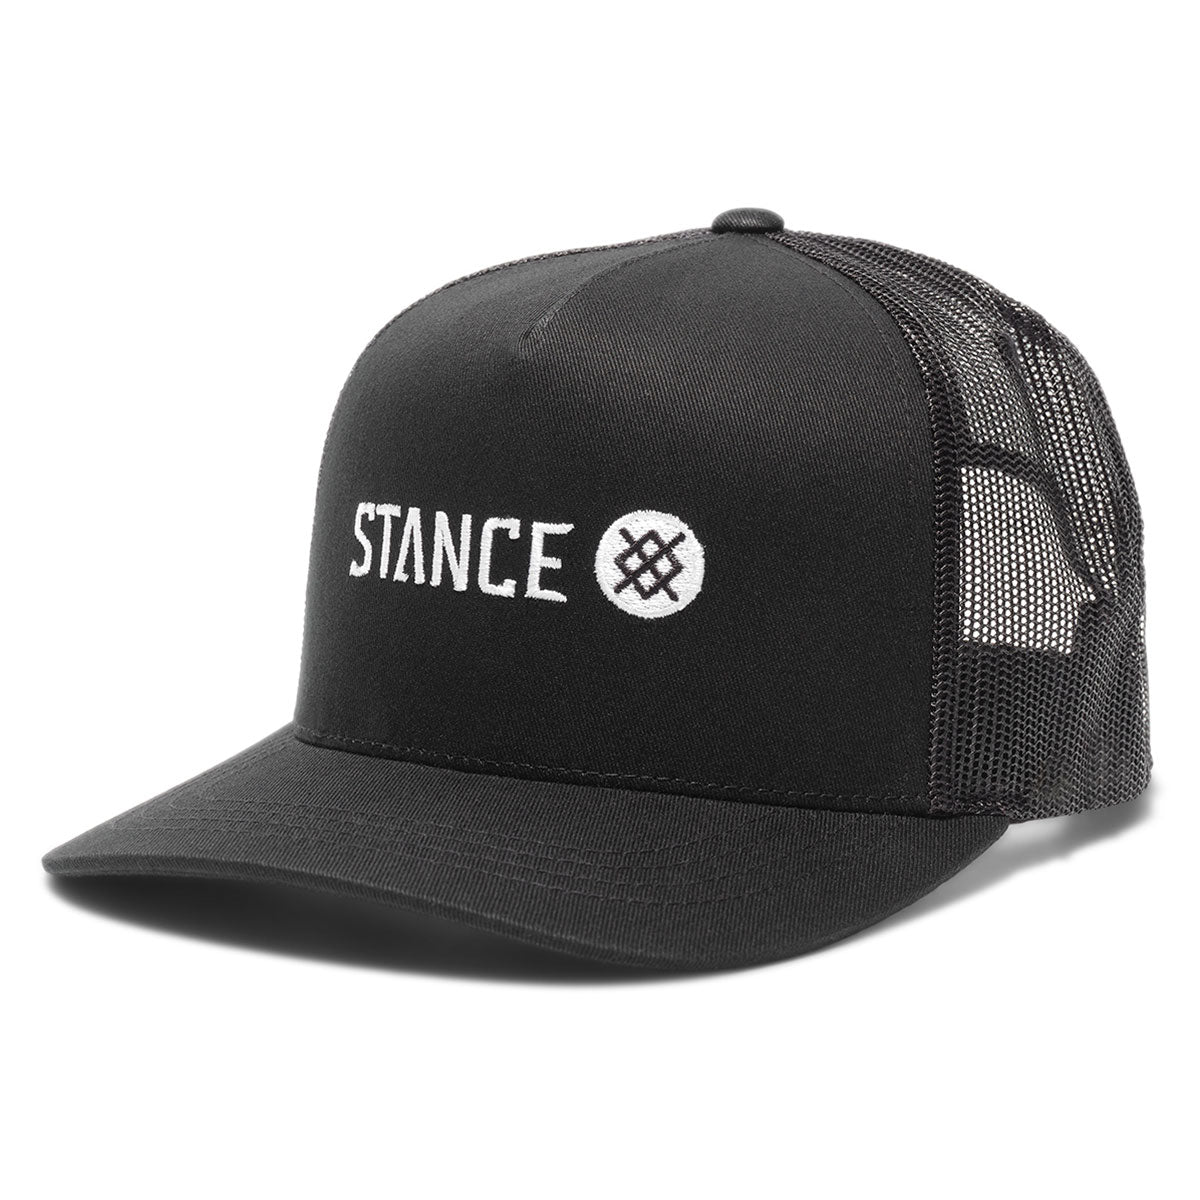 Stance Icon Trucker Hat - Black image 1